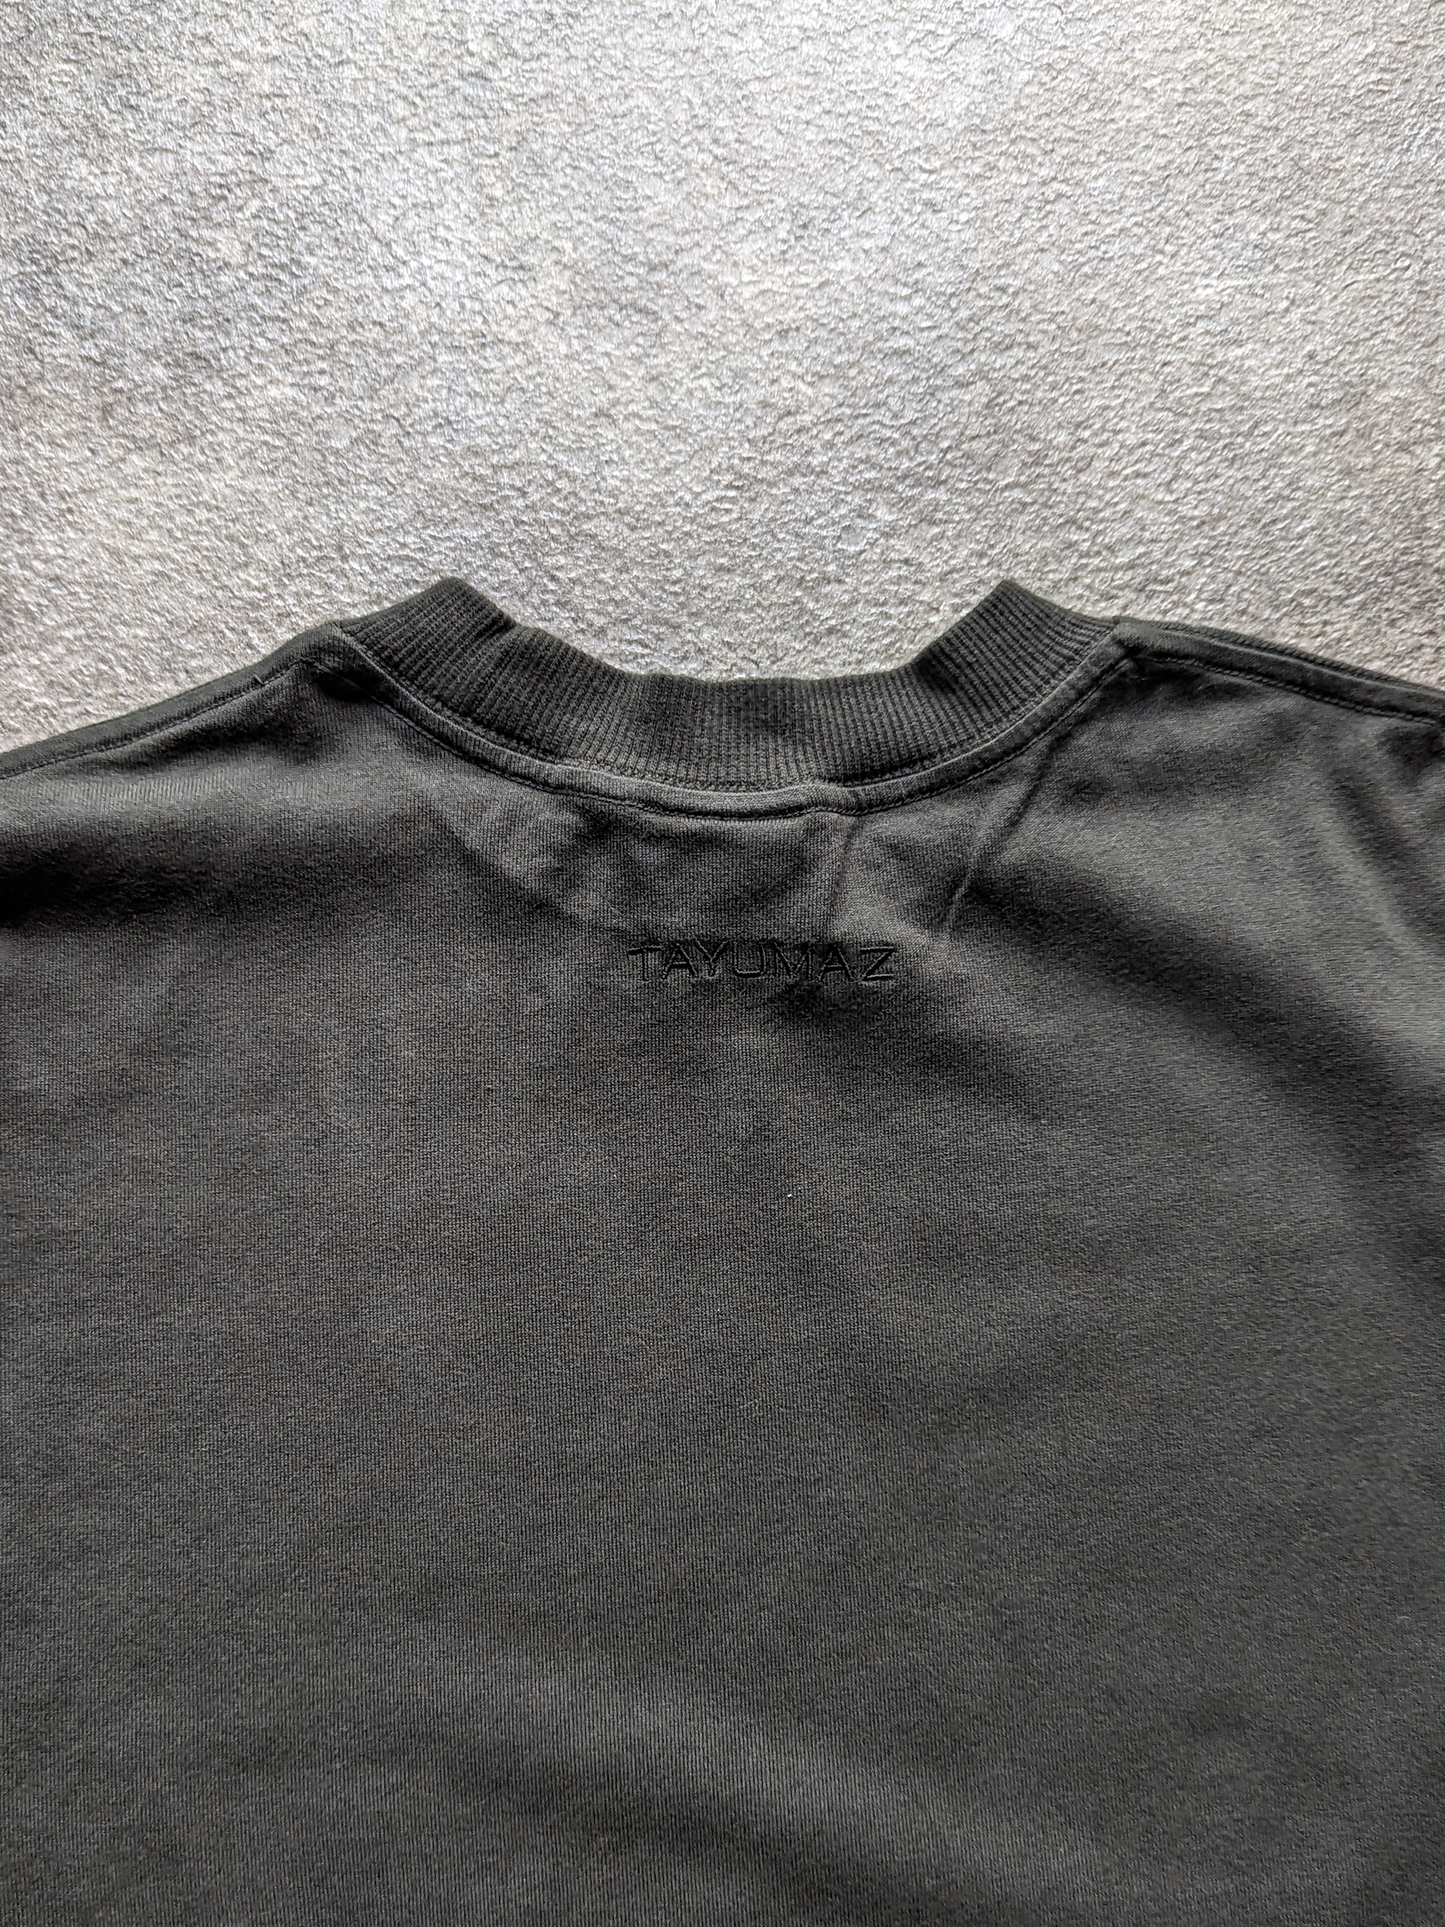 Washed cotton long T-shirt black